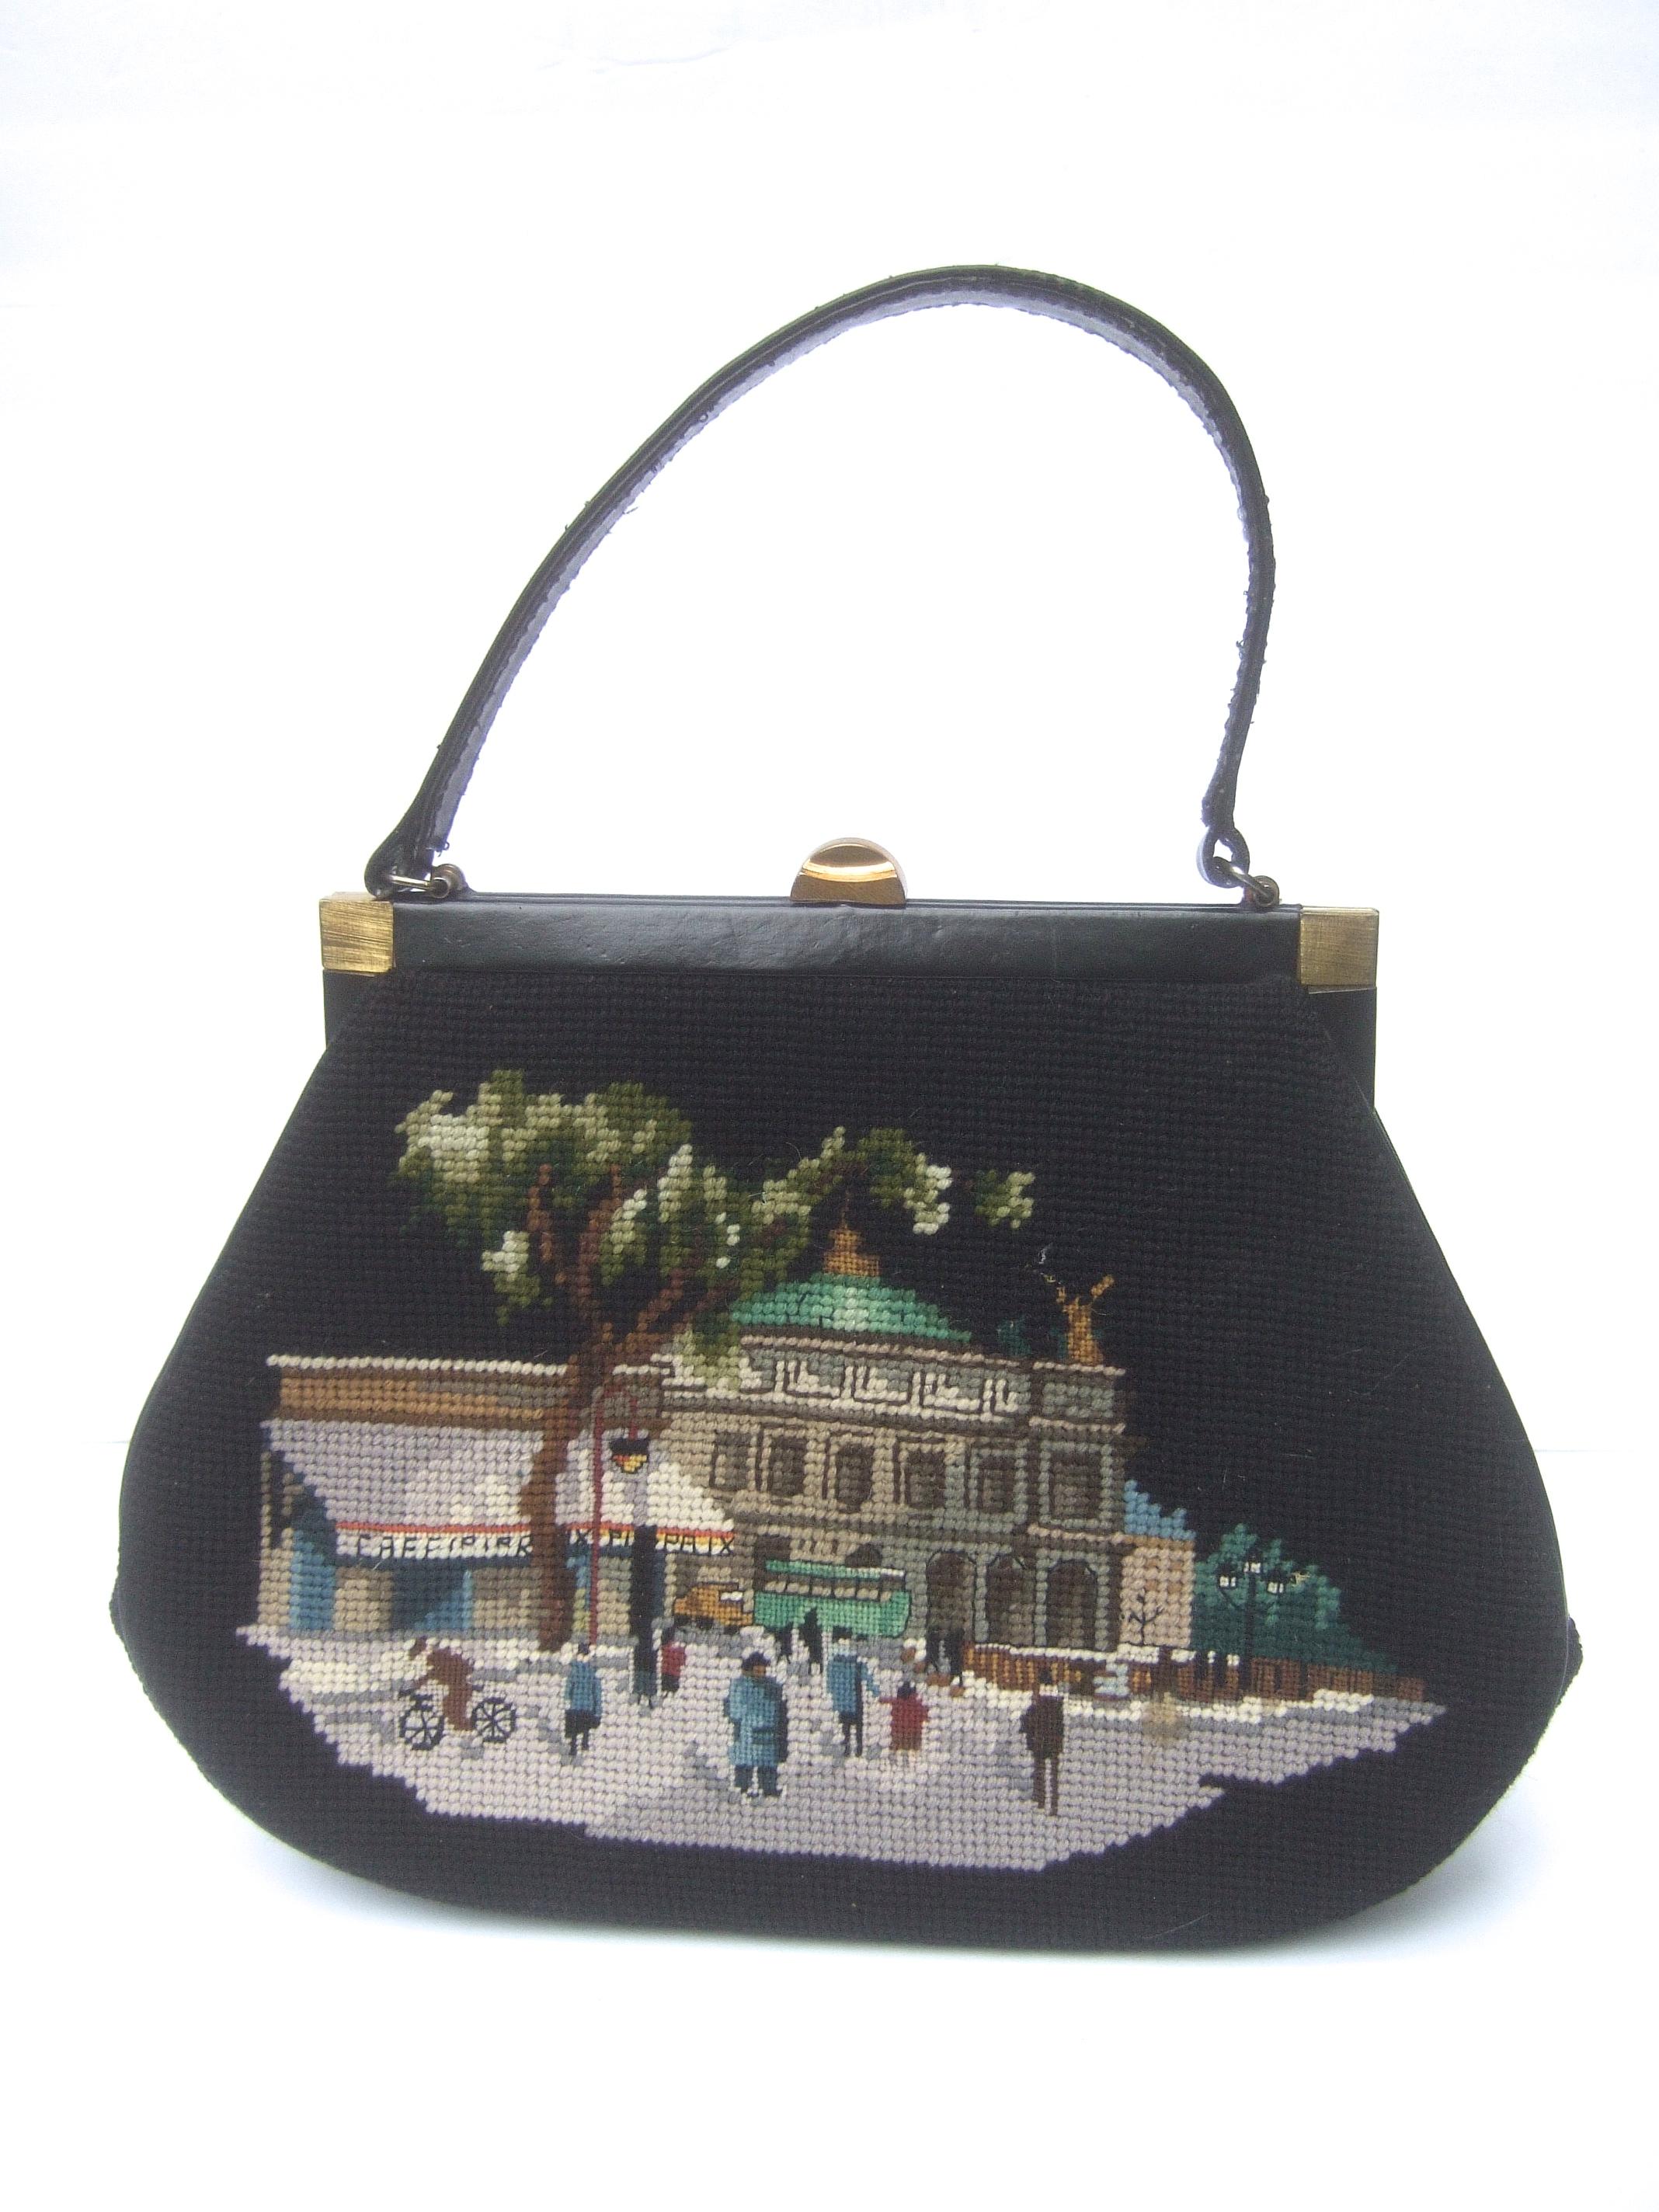 Needlepoint French Scene Artisan Handbag c 1960 7